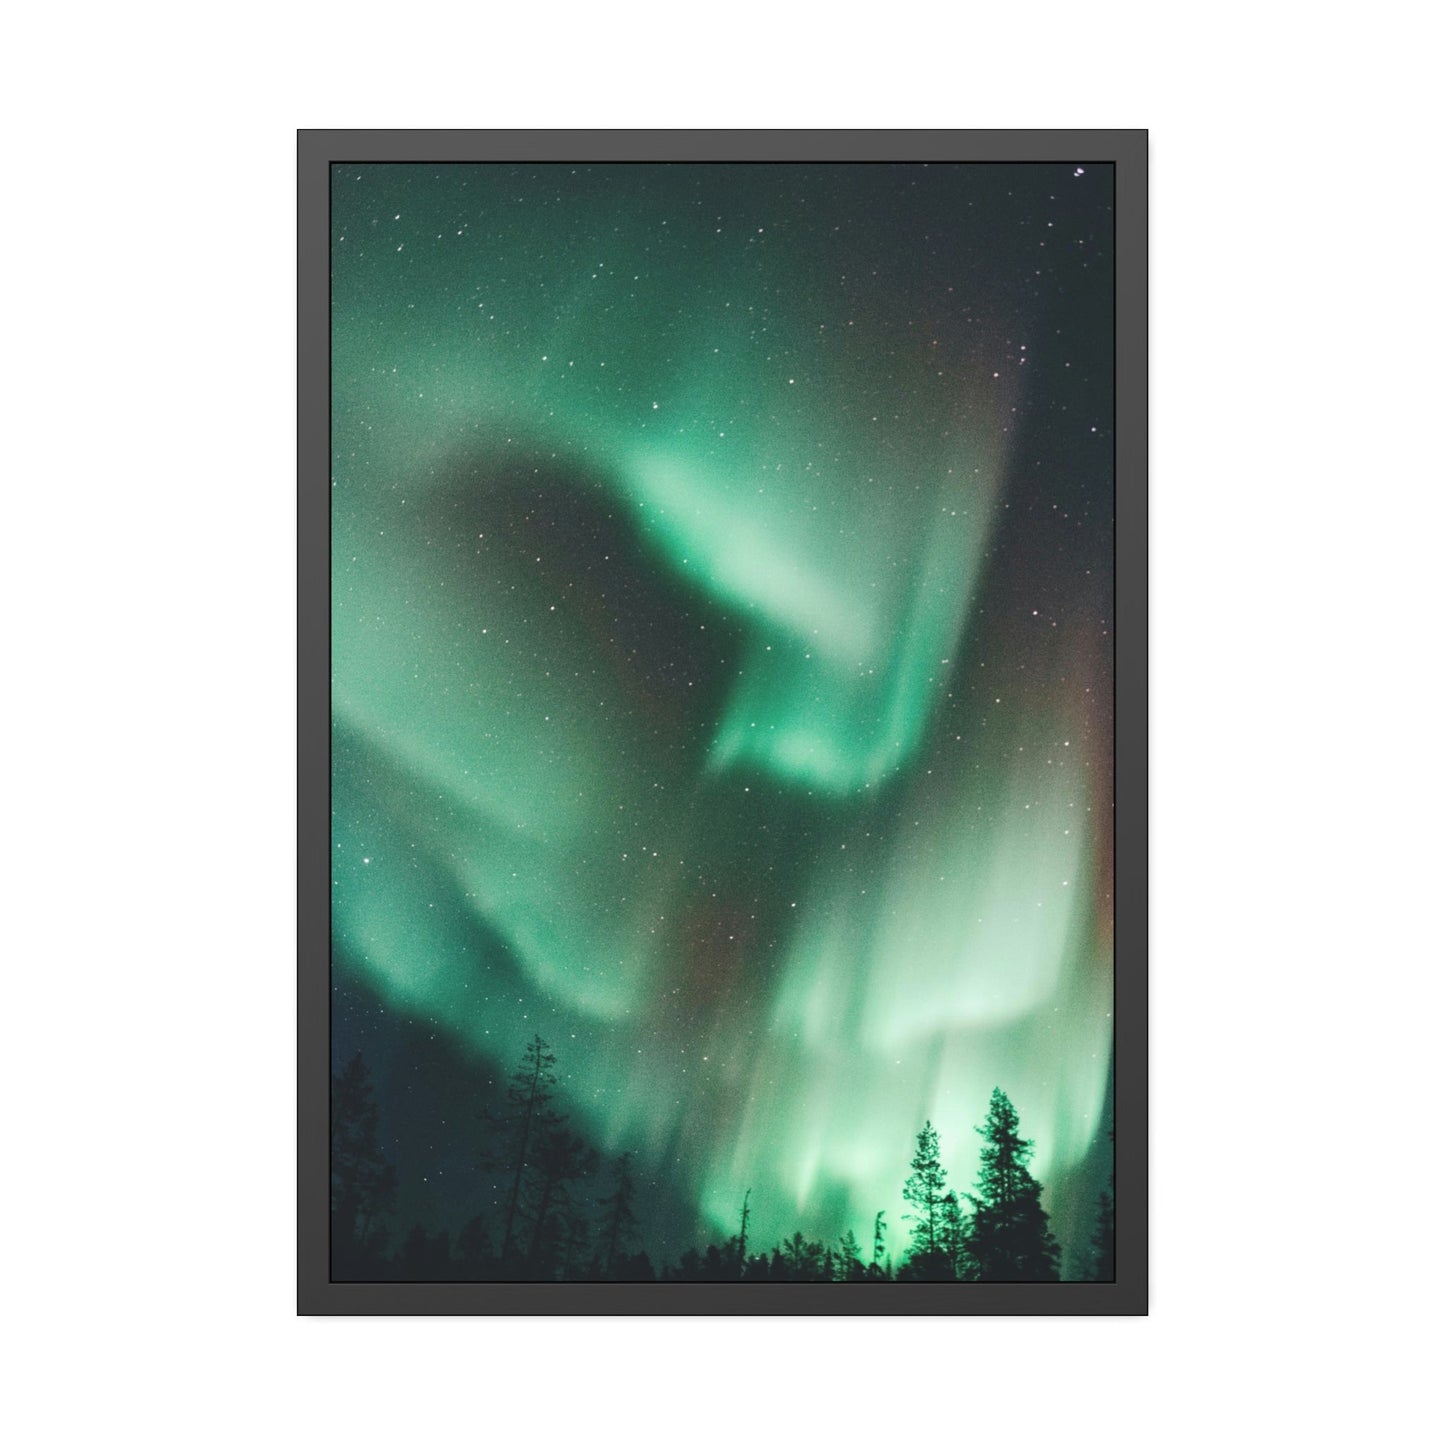 Luminous Aurora Borealis: An Illuminating Expression of Nature's Artistry